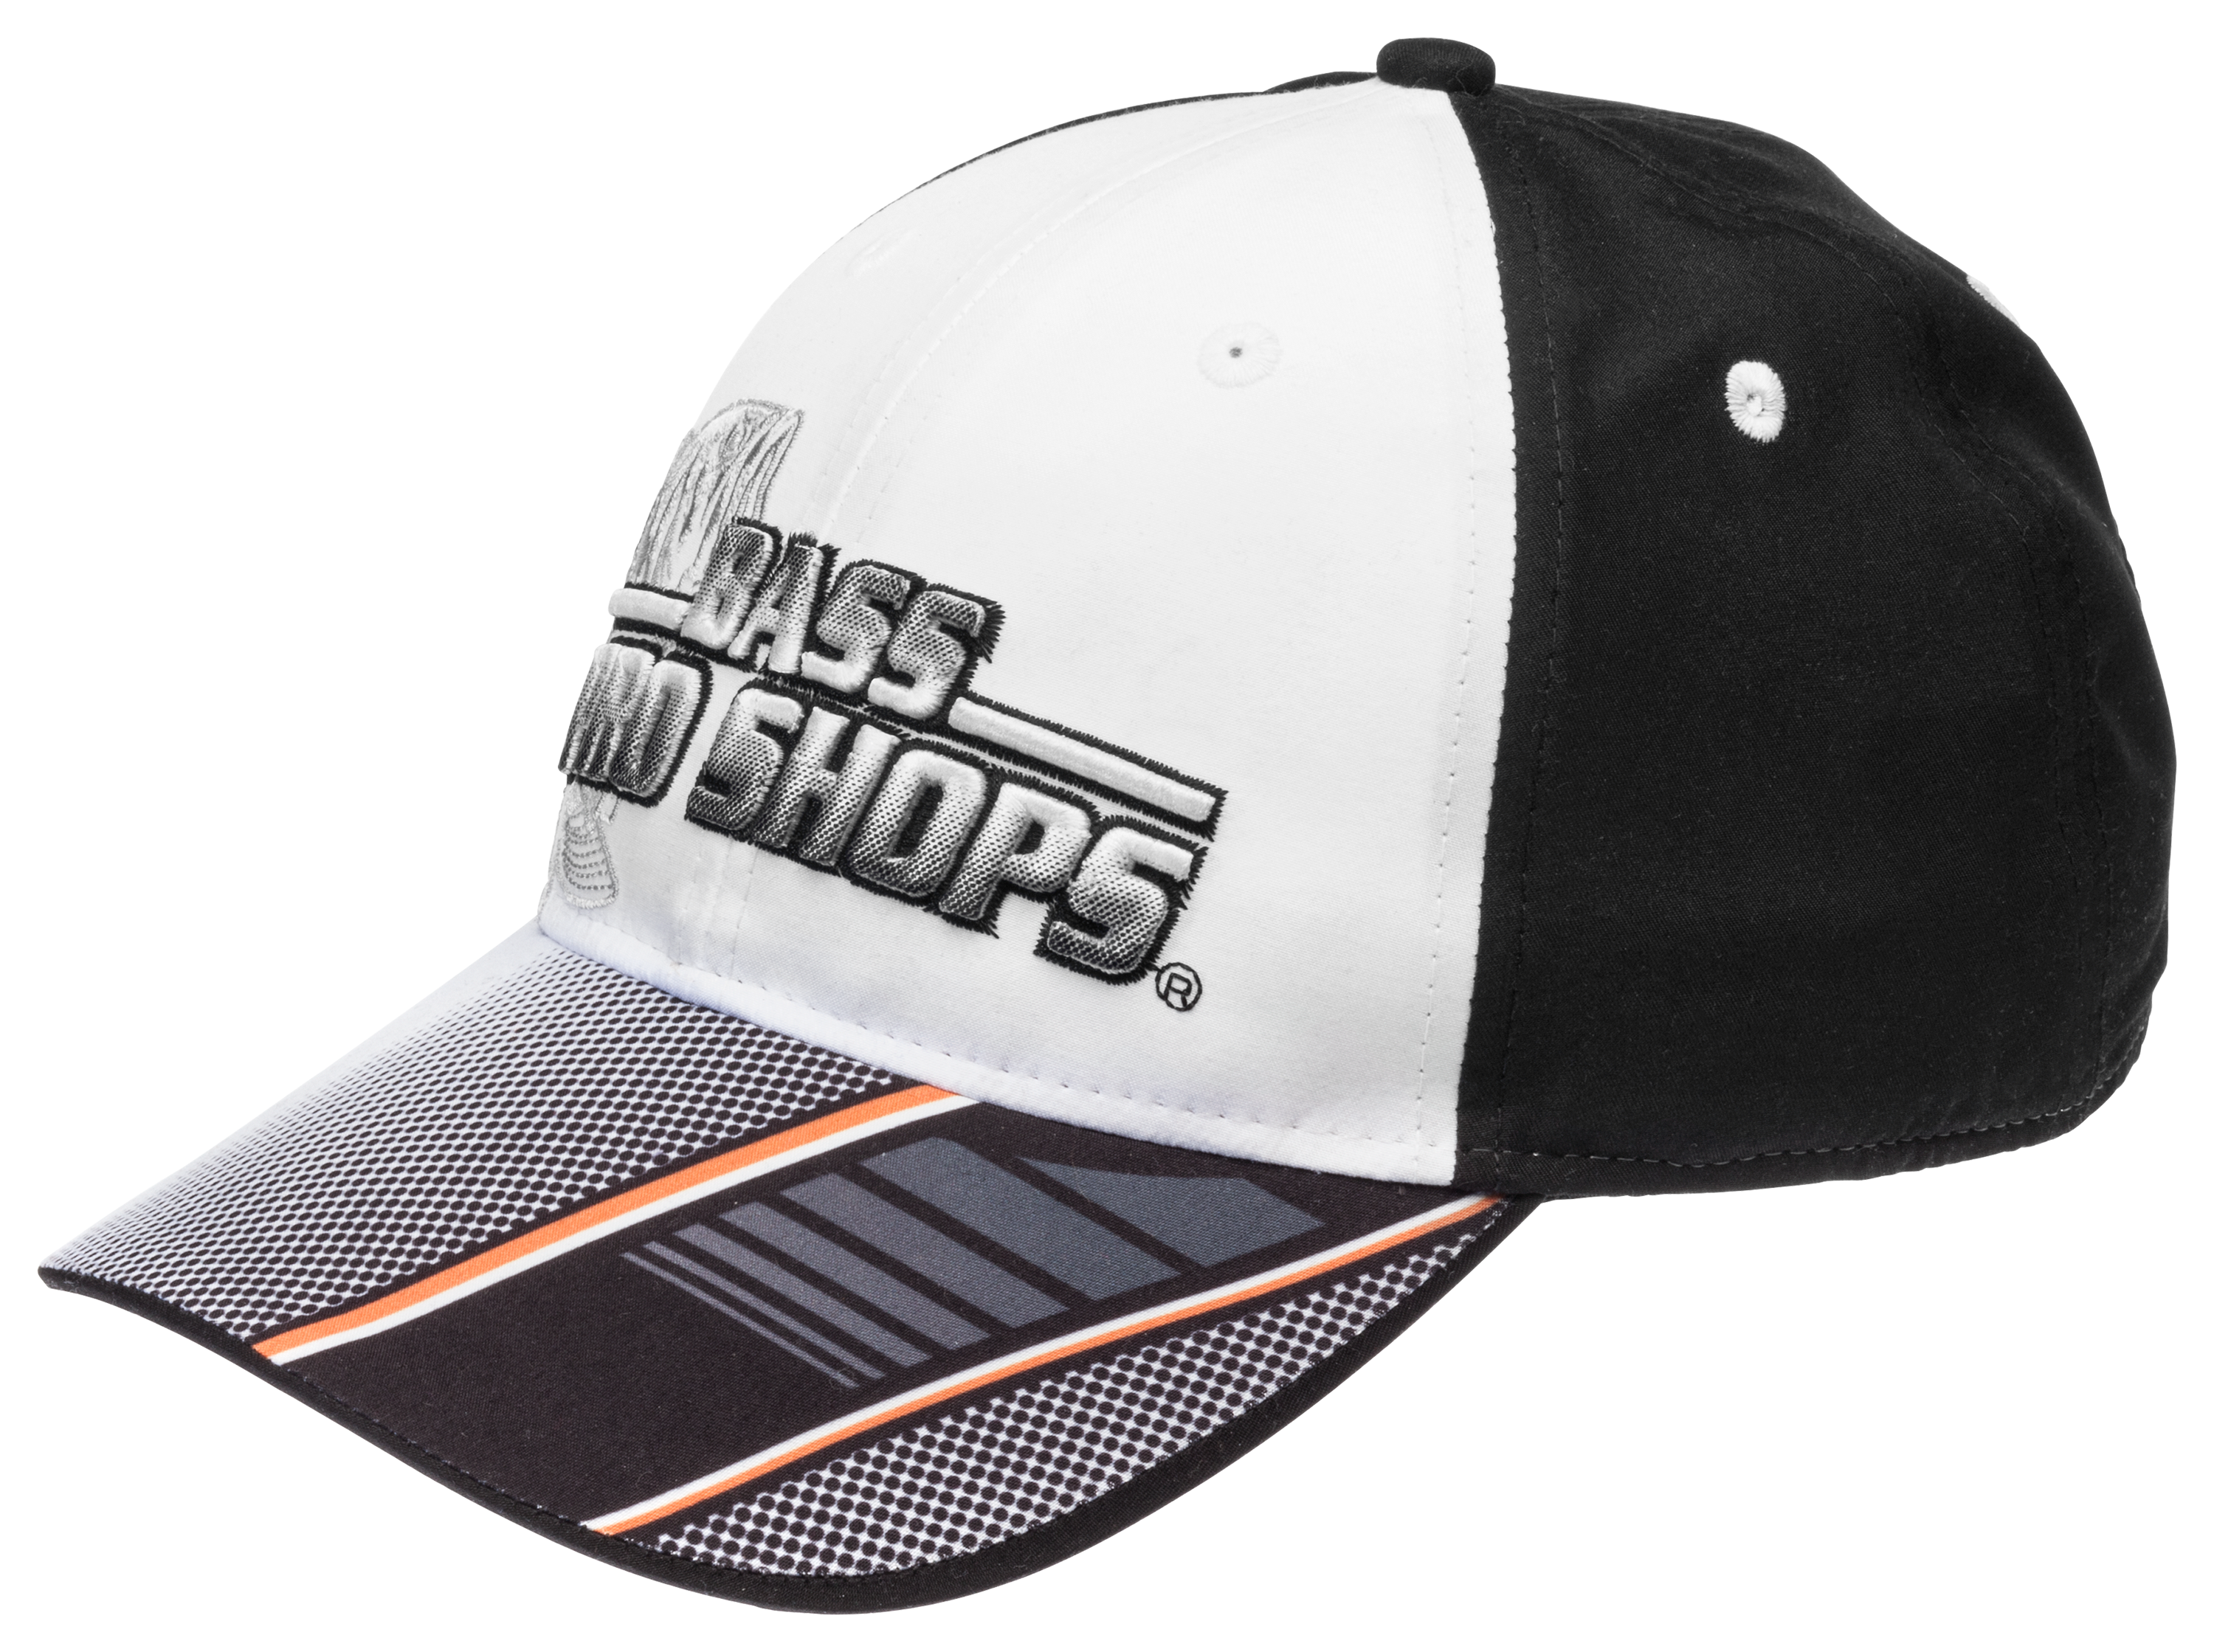 Bass Pro Shops Hat (Black) : : Clothing, Shoes & Accessories